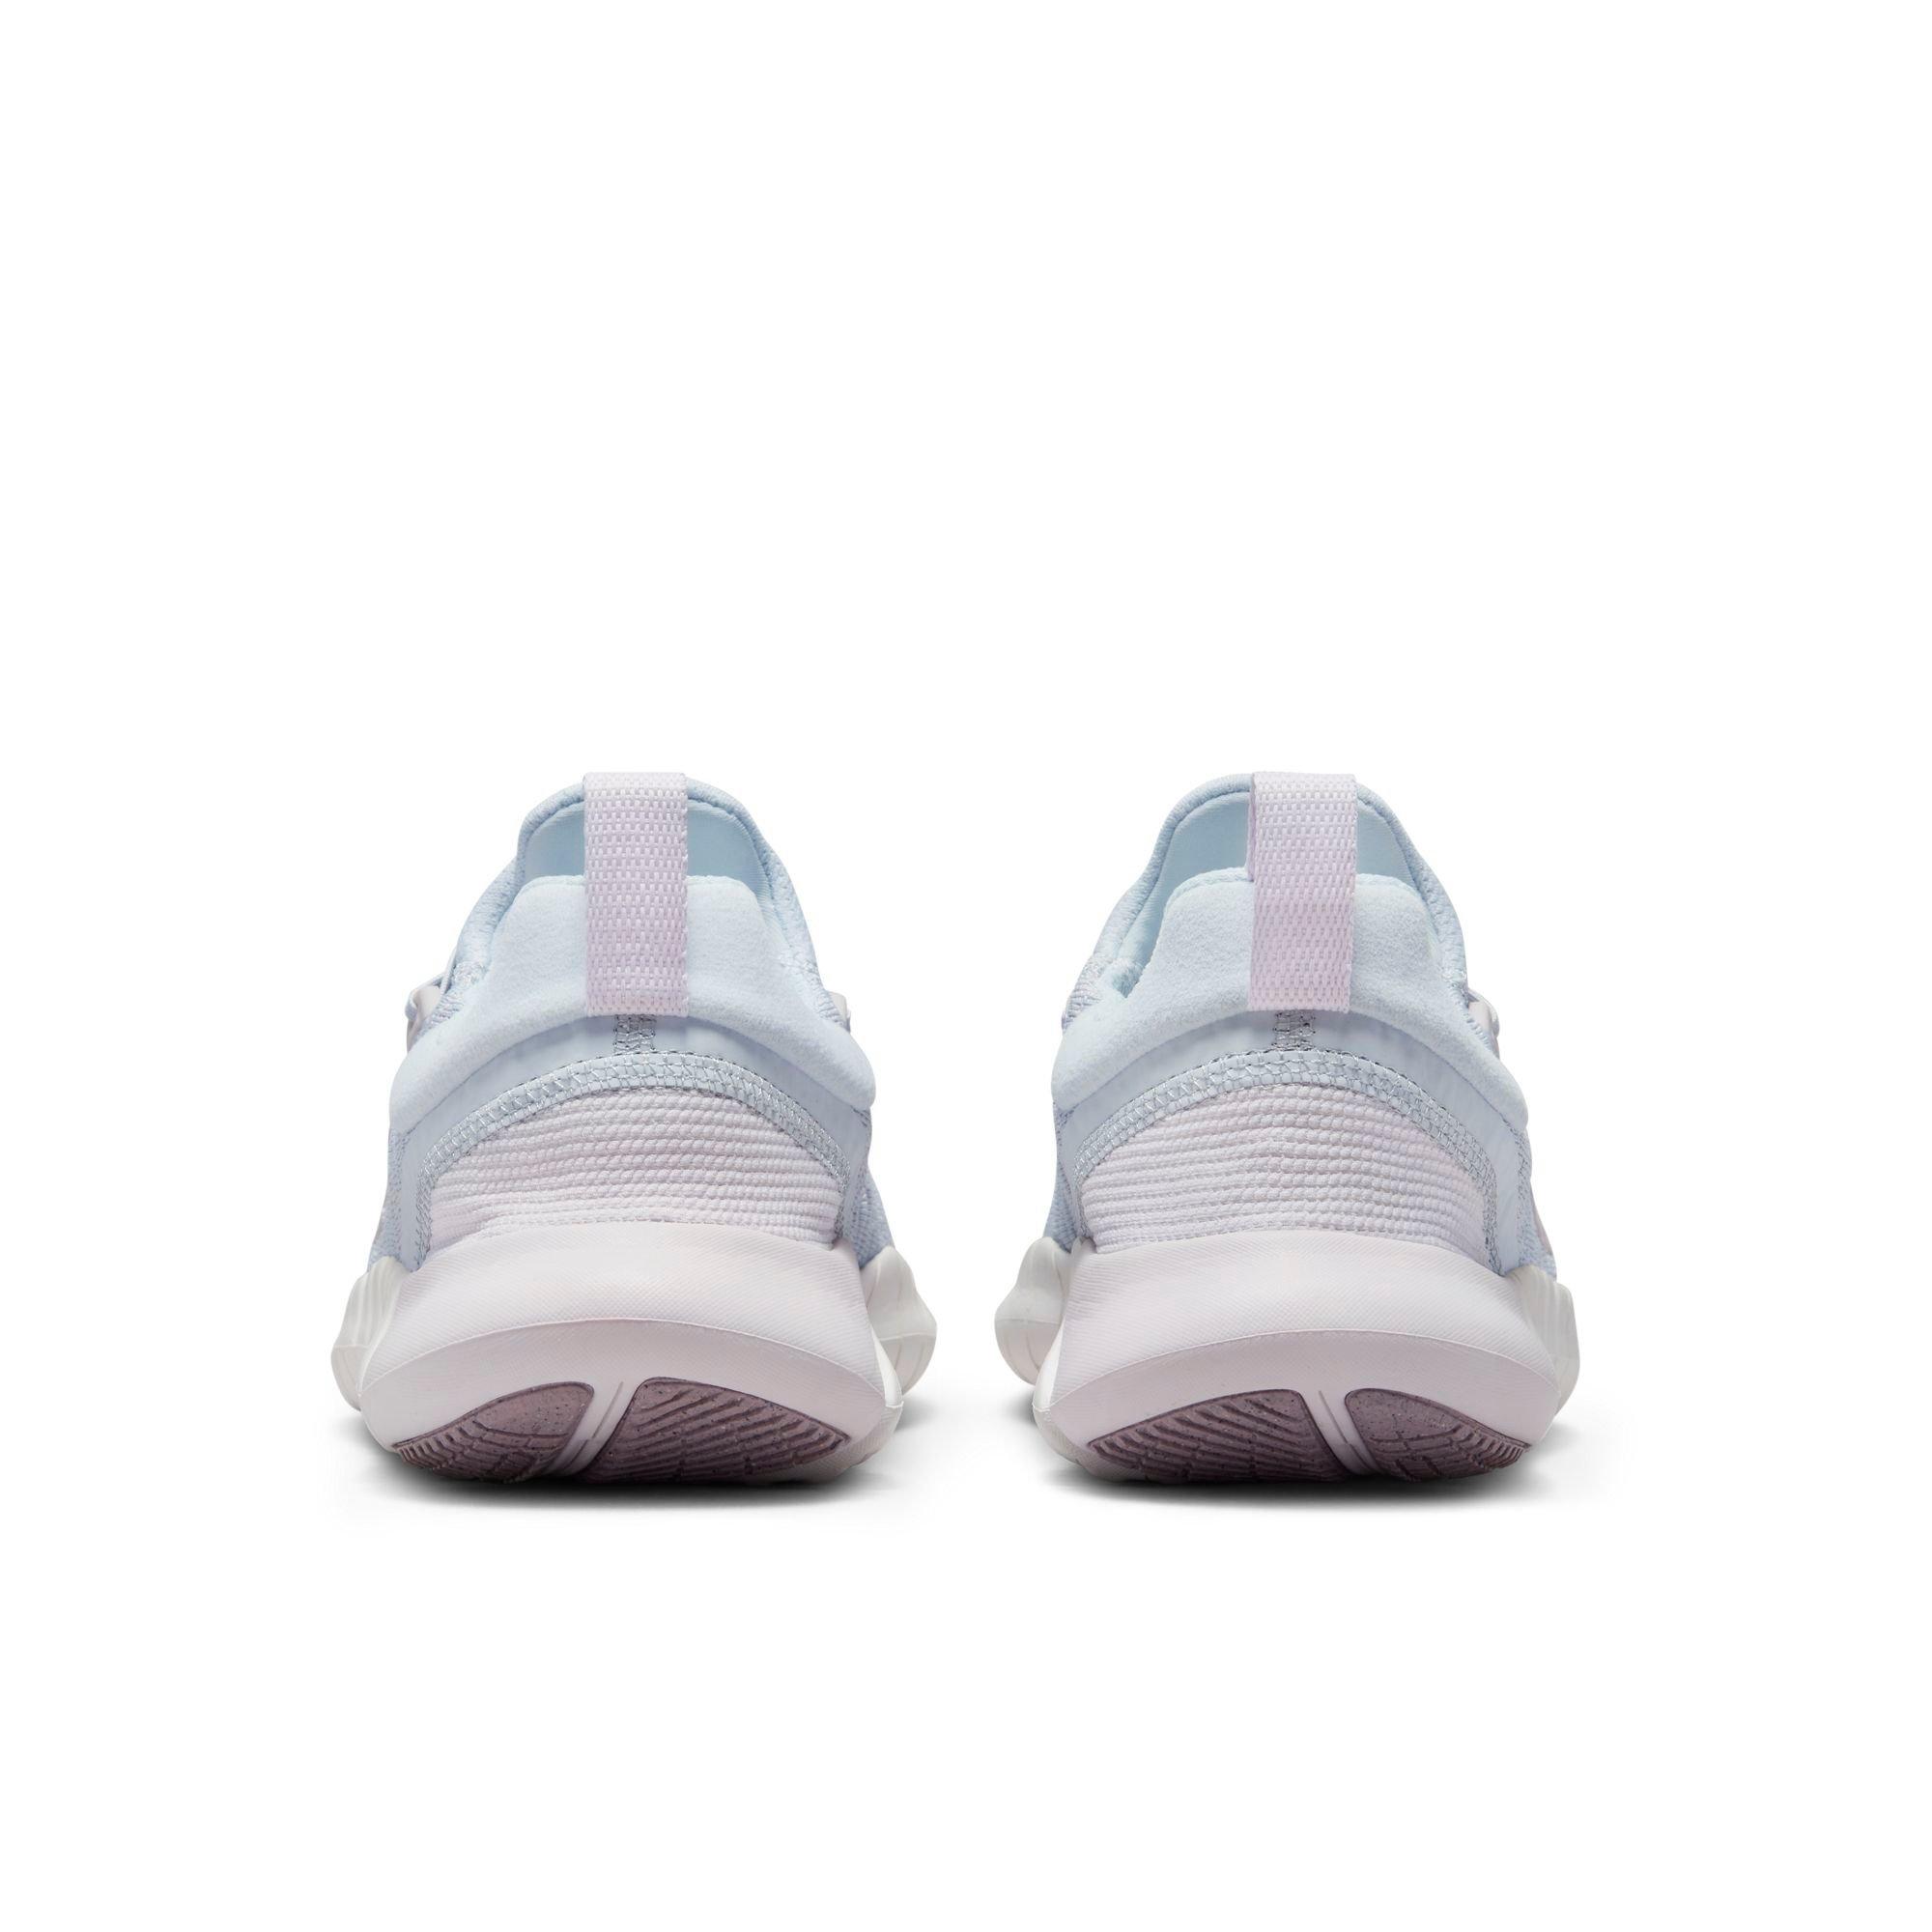 Tot stand brengen Misbruik Belastingbetaler Nike Free Run 5.0 "Aura/Plum Fog/Venice/Summit White" Women's Running Shoe